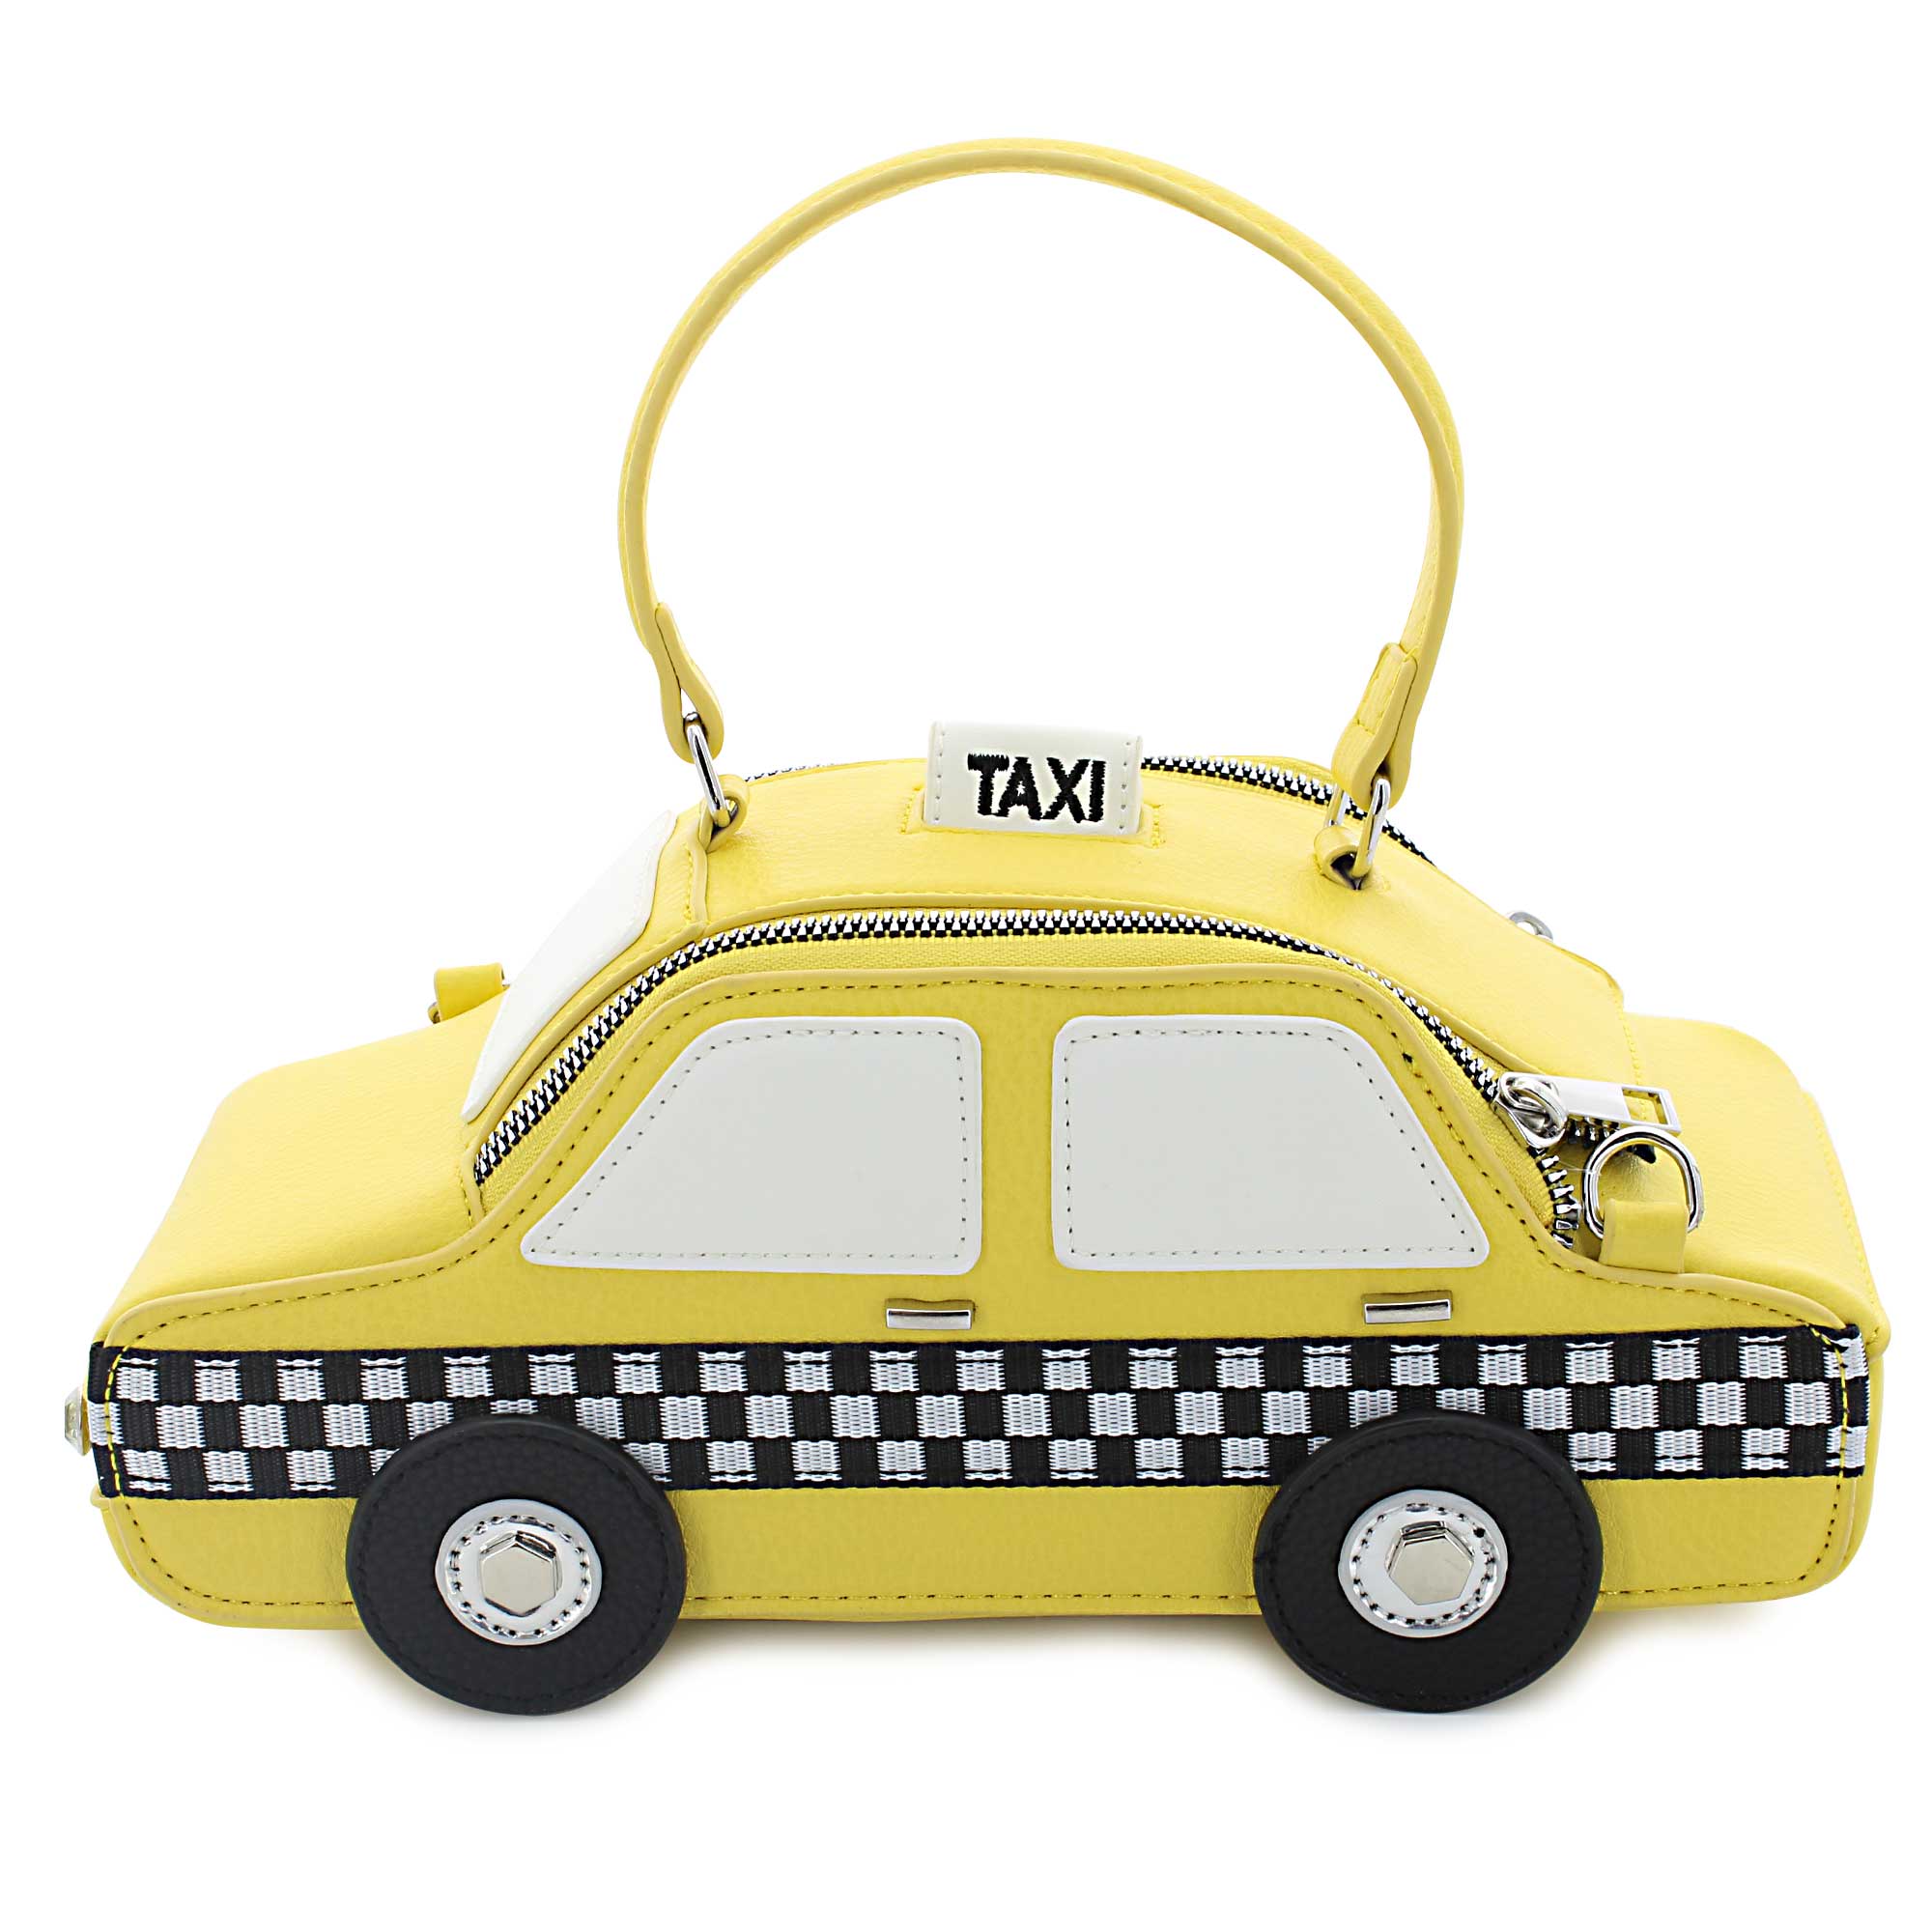 Tami Too Taxi Cab Bag